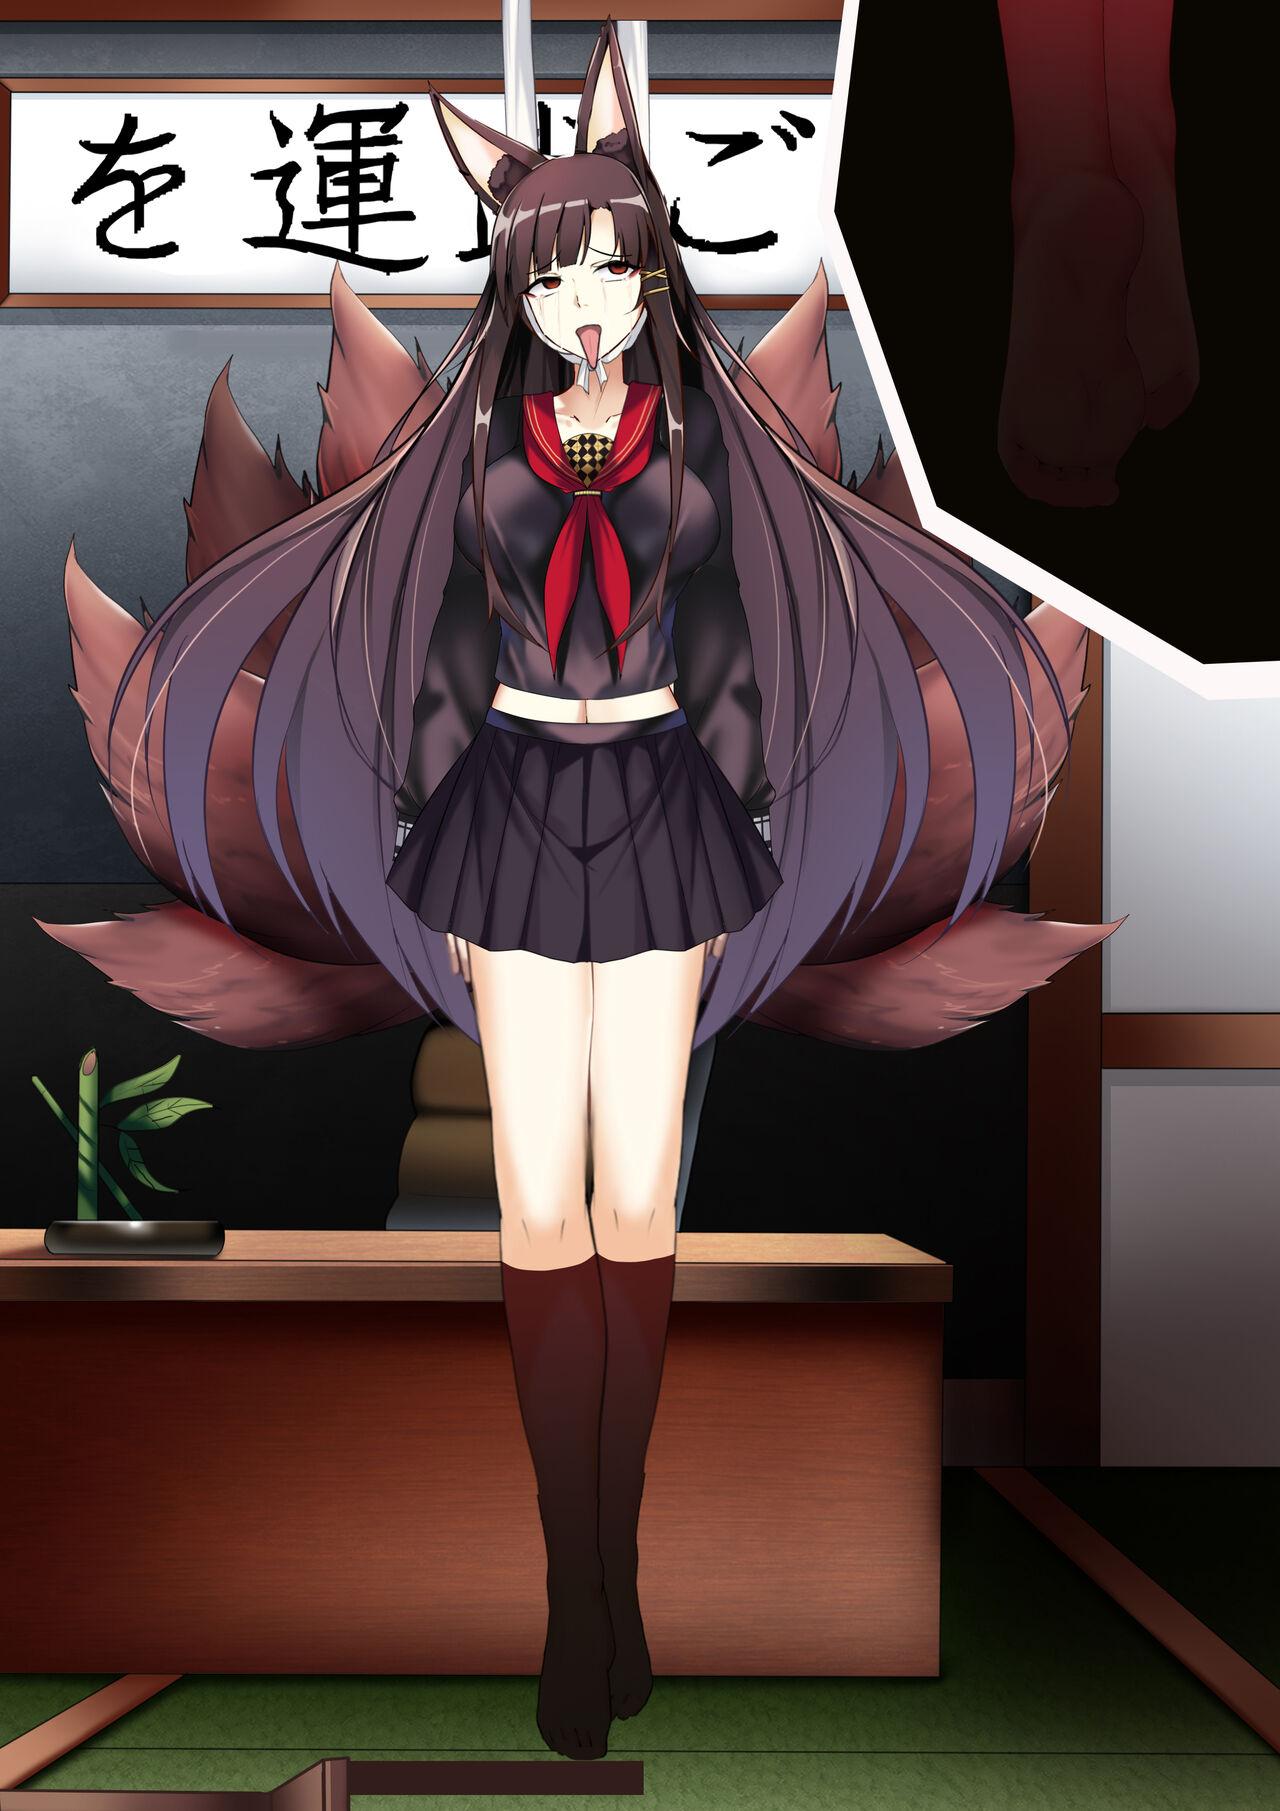 Akagi hanged herself in her office 118